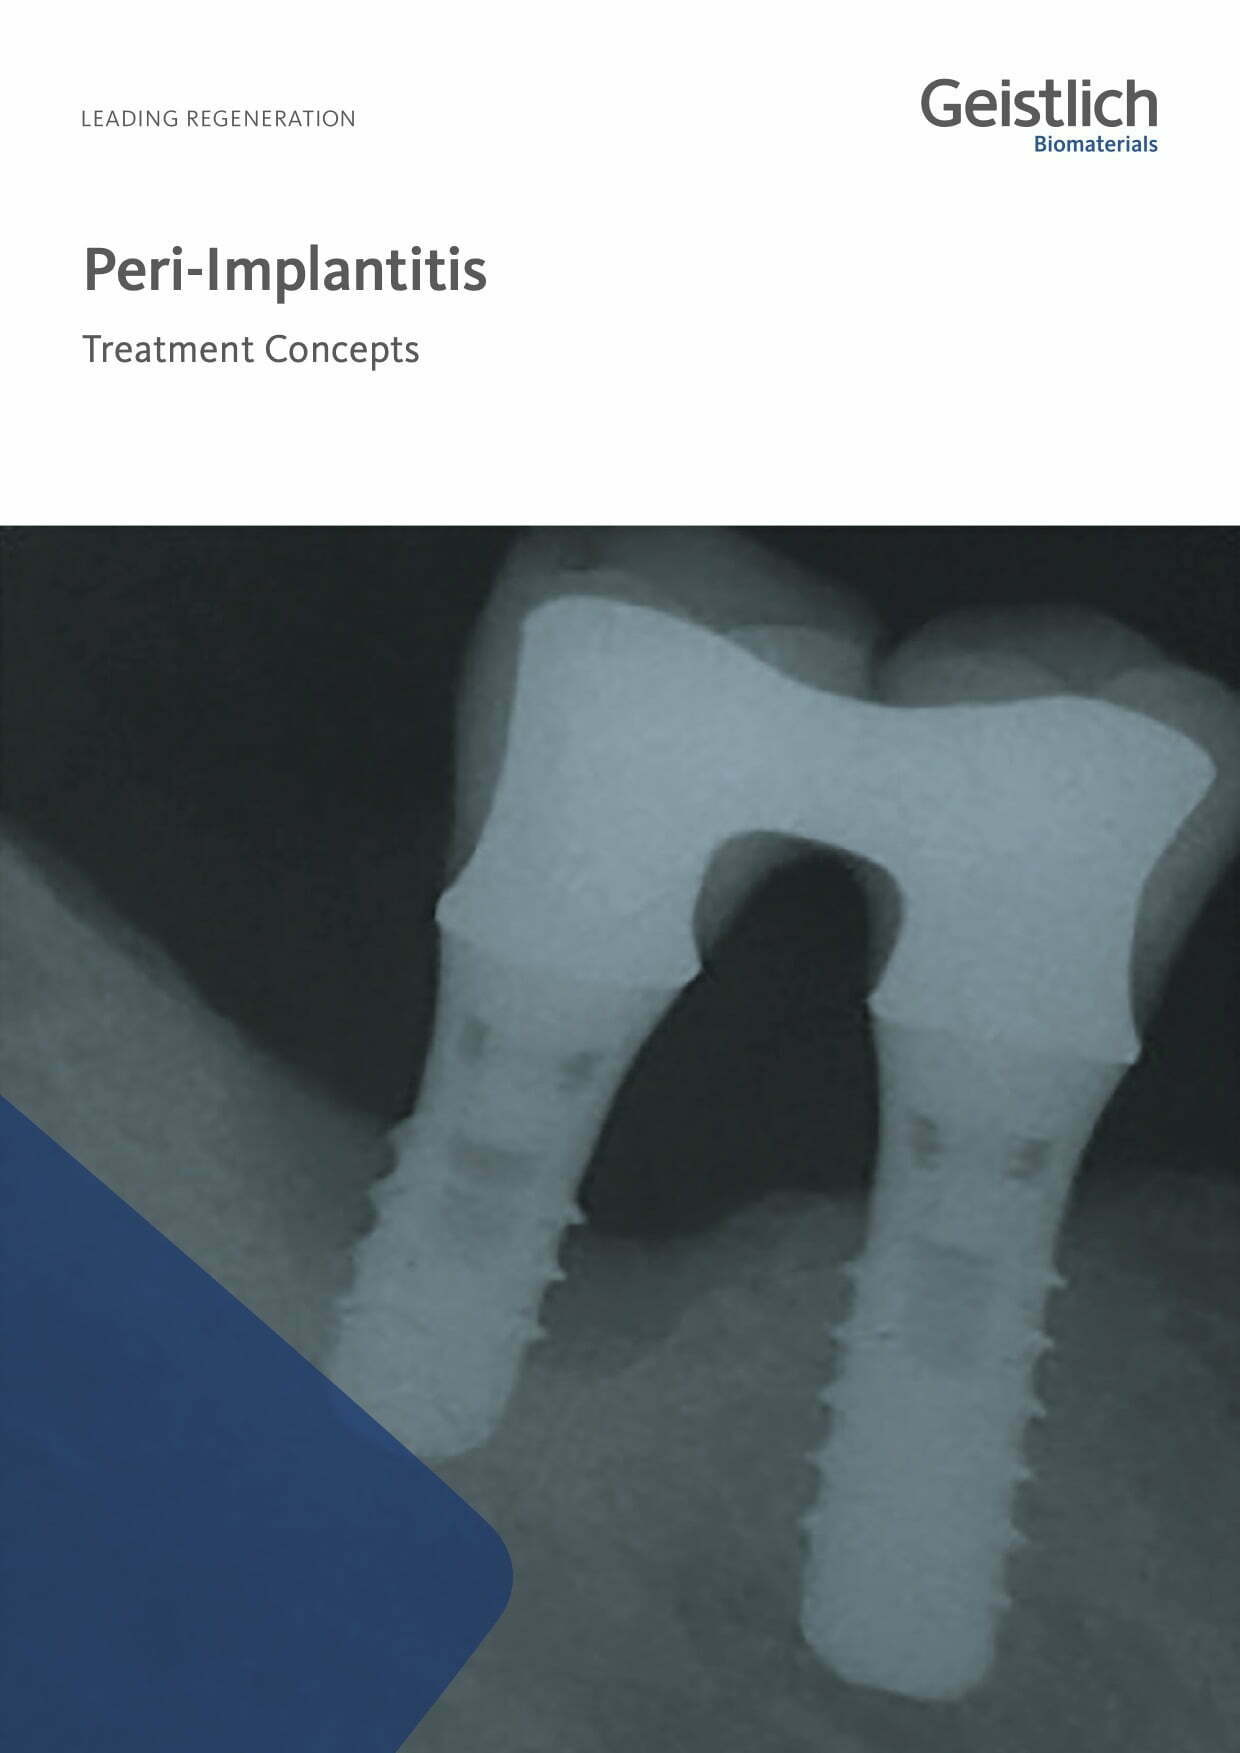 Treatment concepts for peri-implantitis